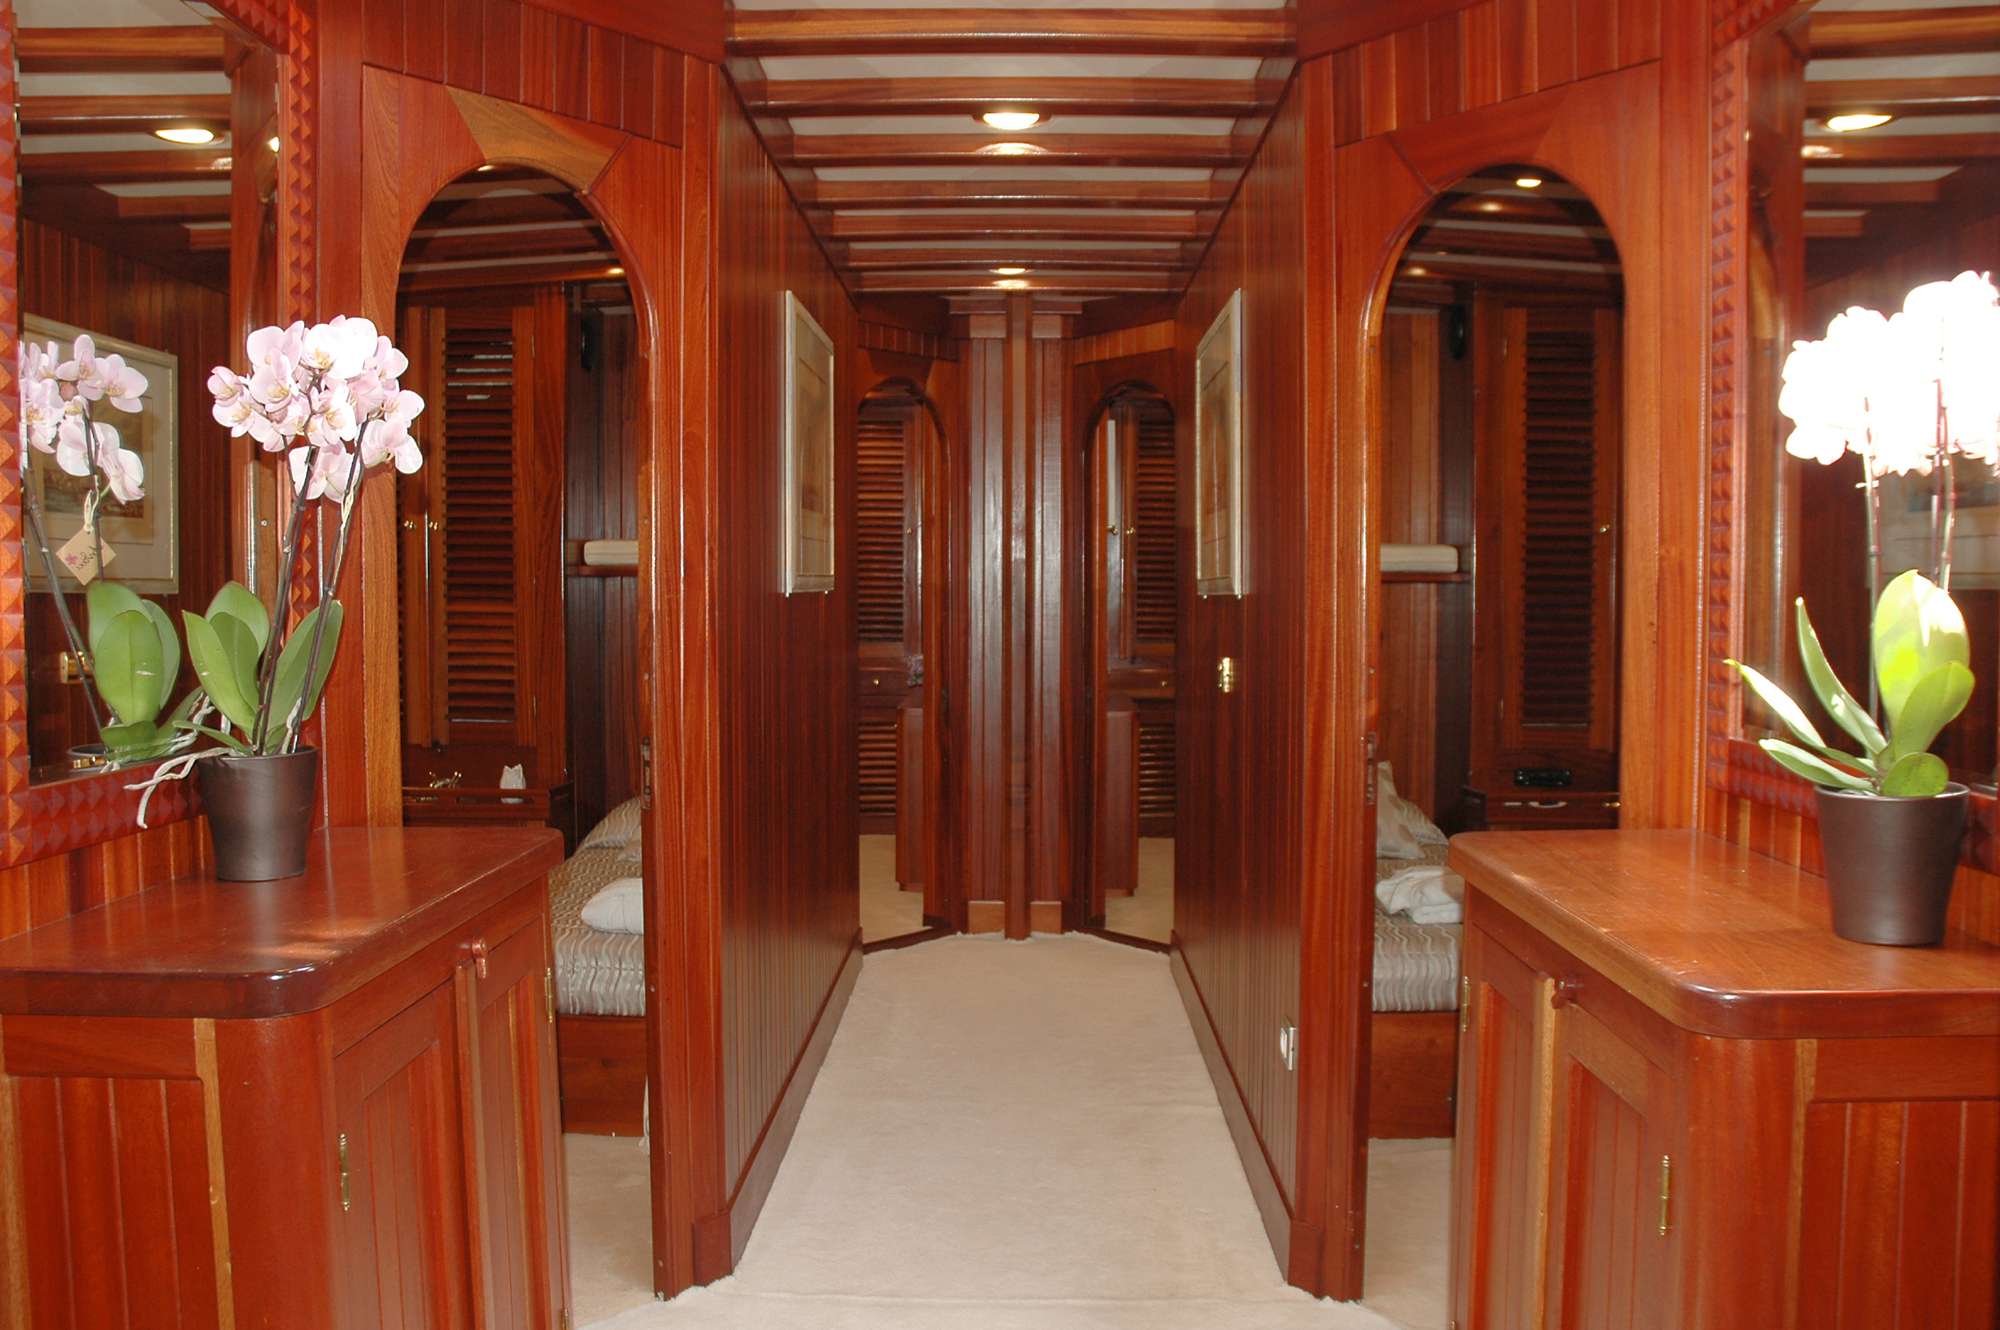 MATINA Yacht Charter - Interior Details